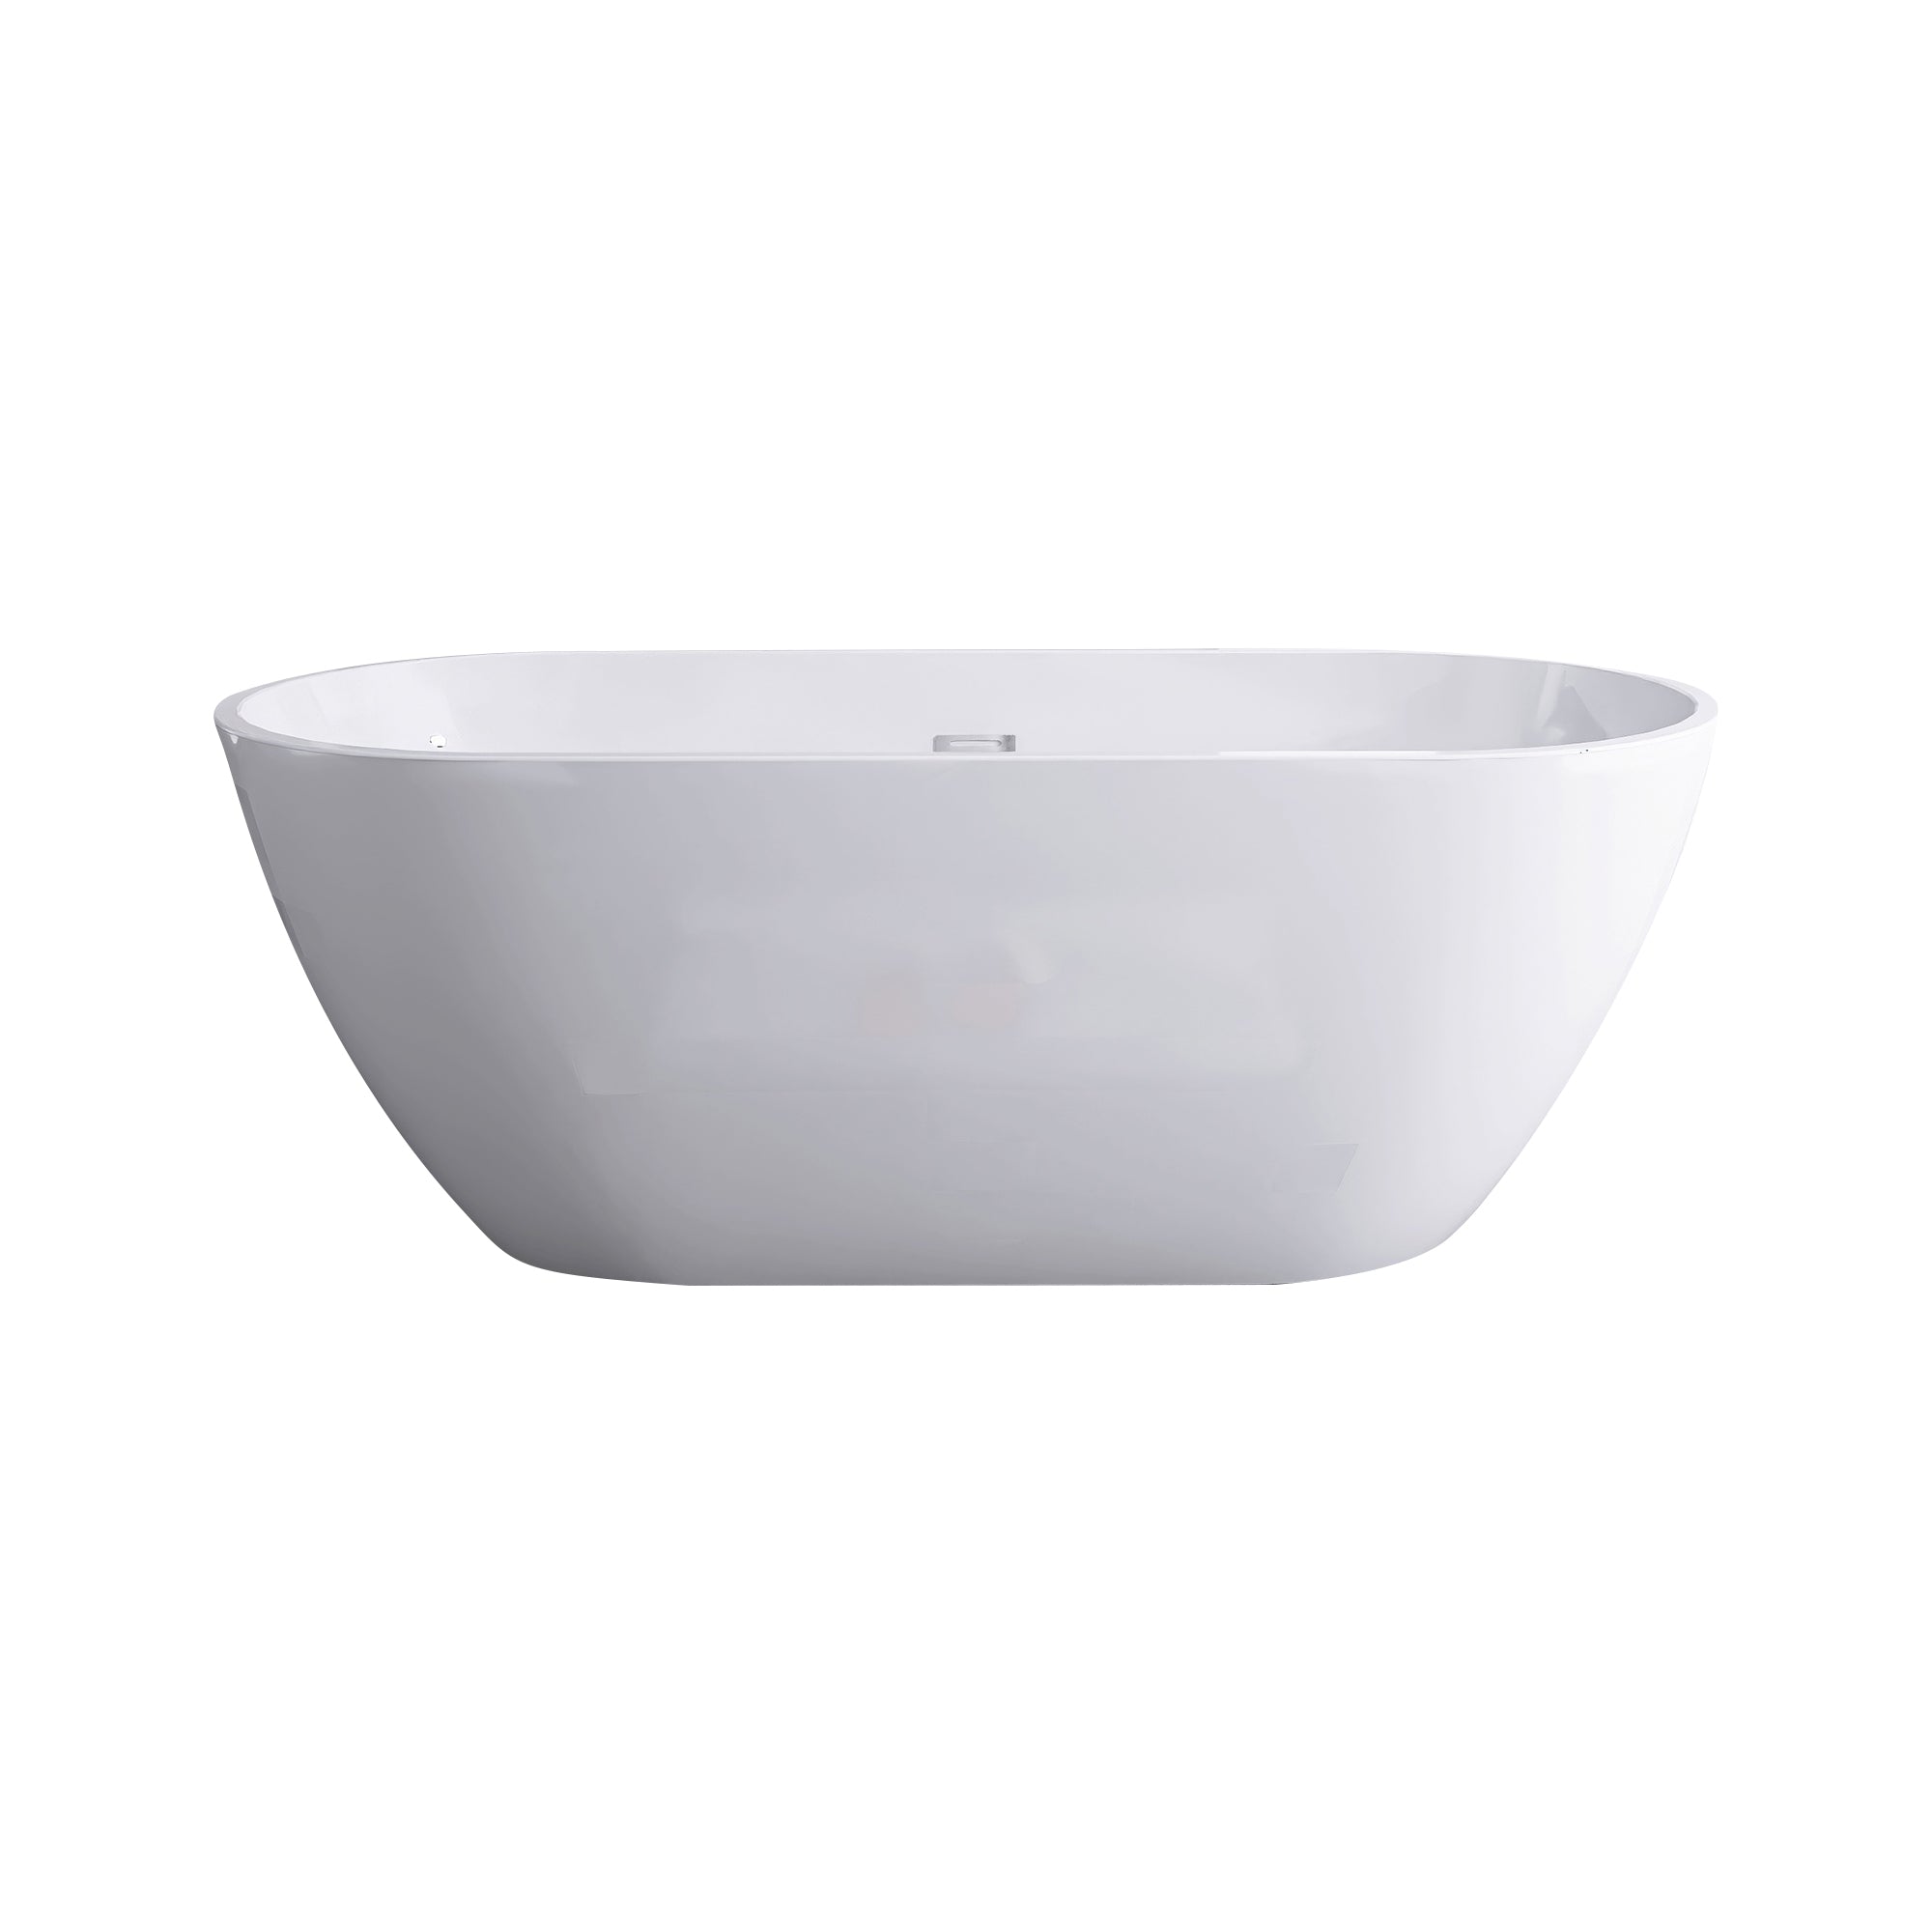 Staykiwi Acrylic Freestanding Soaking Bathtub in Glossy White with Chrome Drain